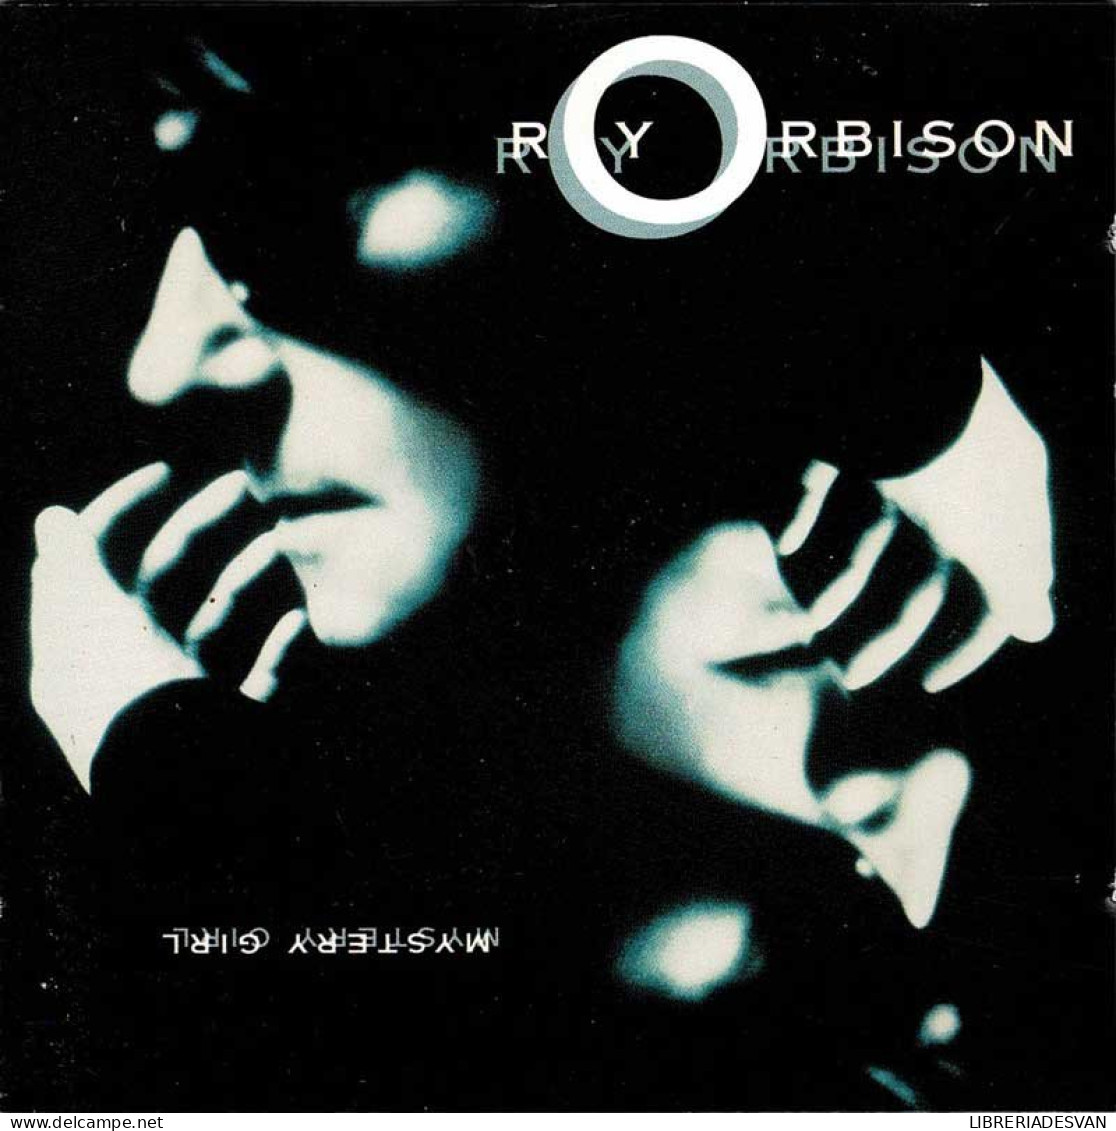 Roy Orbison - Mystery Girl. CD - Rock